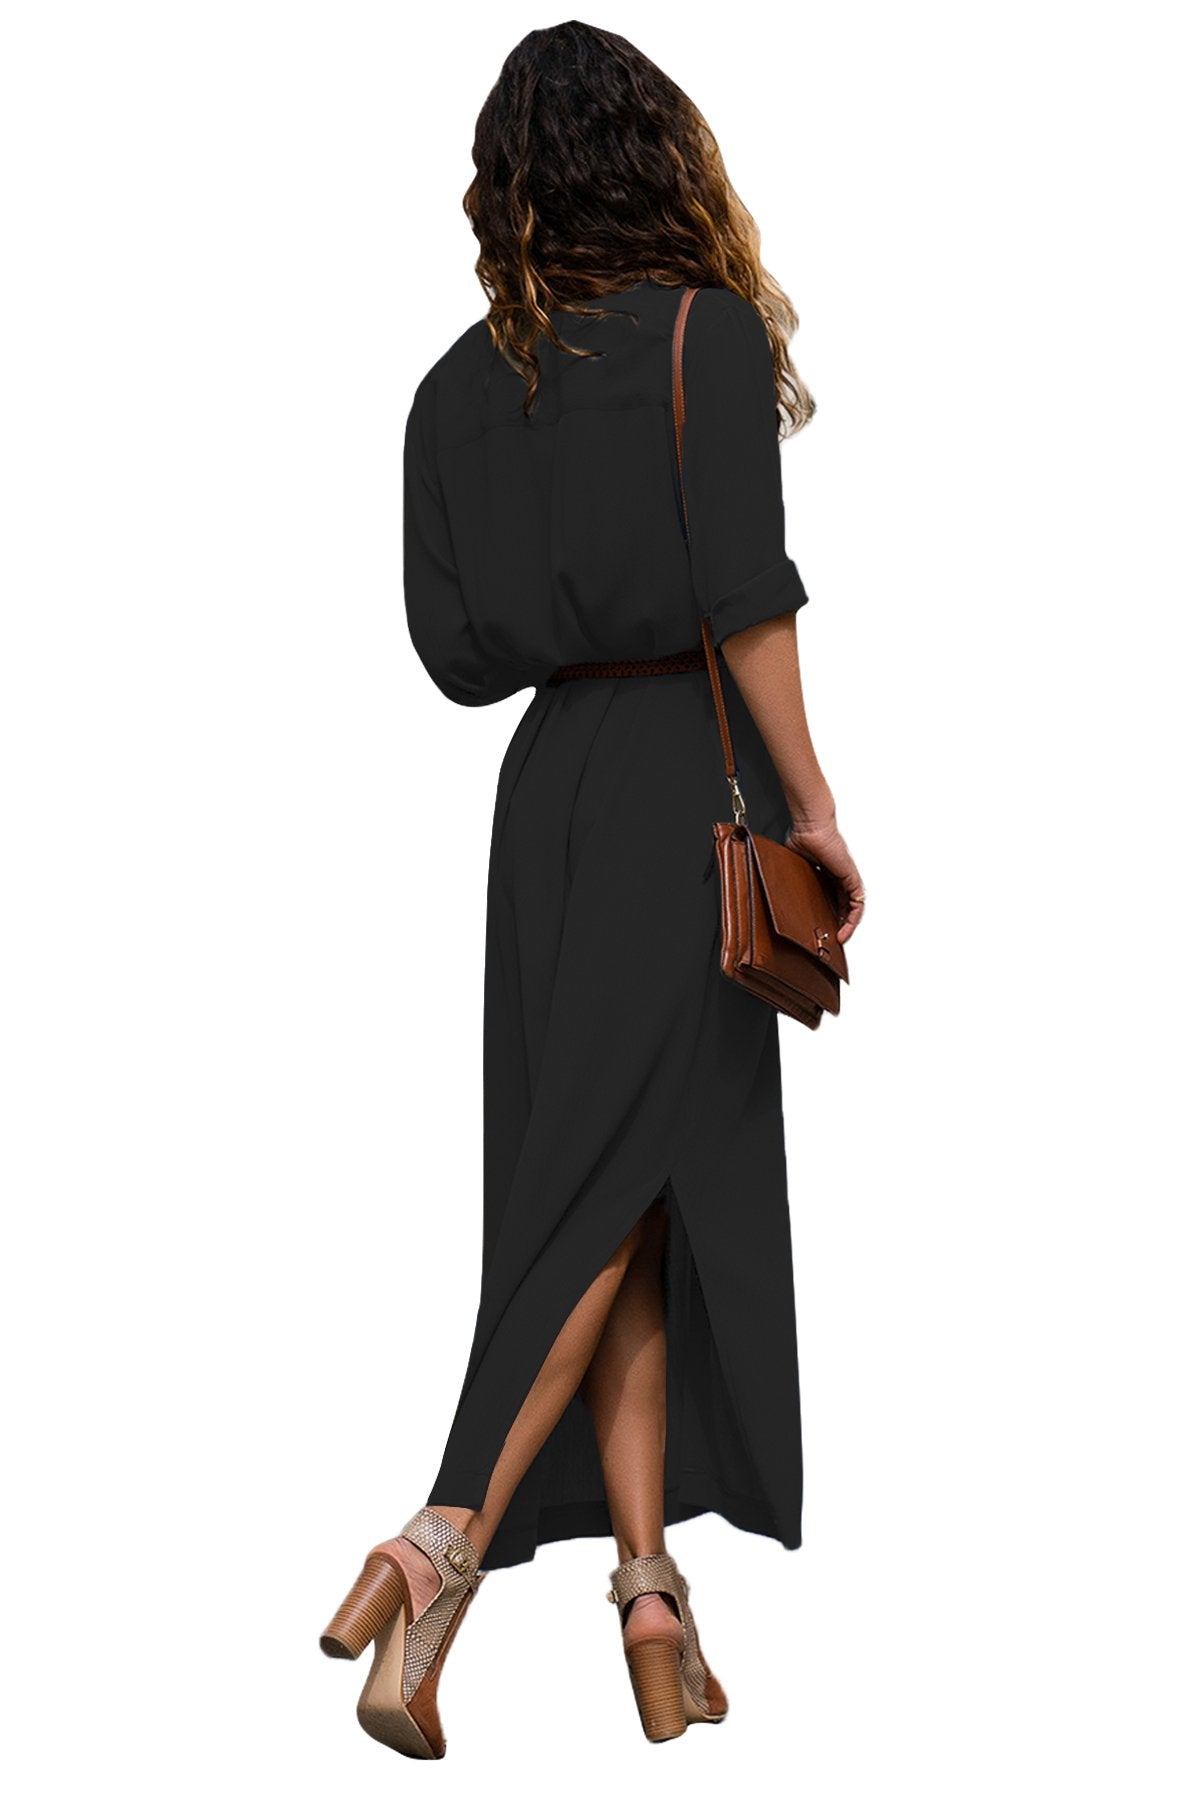 Casual Black Slit Maxi Shirt Dress with Sash - Casual_Black_Slit_Maxi_Shirt_Dress_with_Sash_2